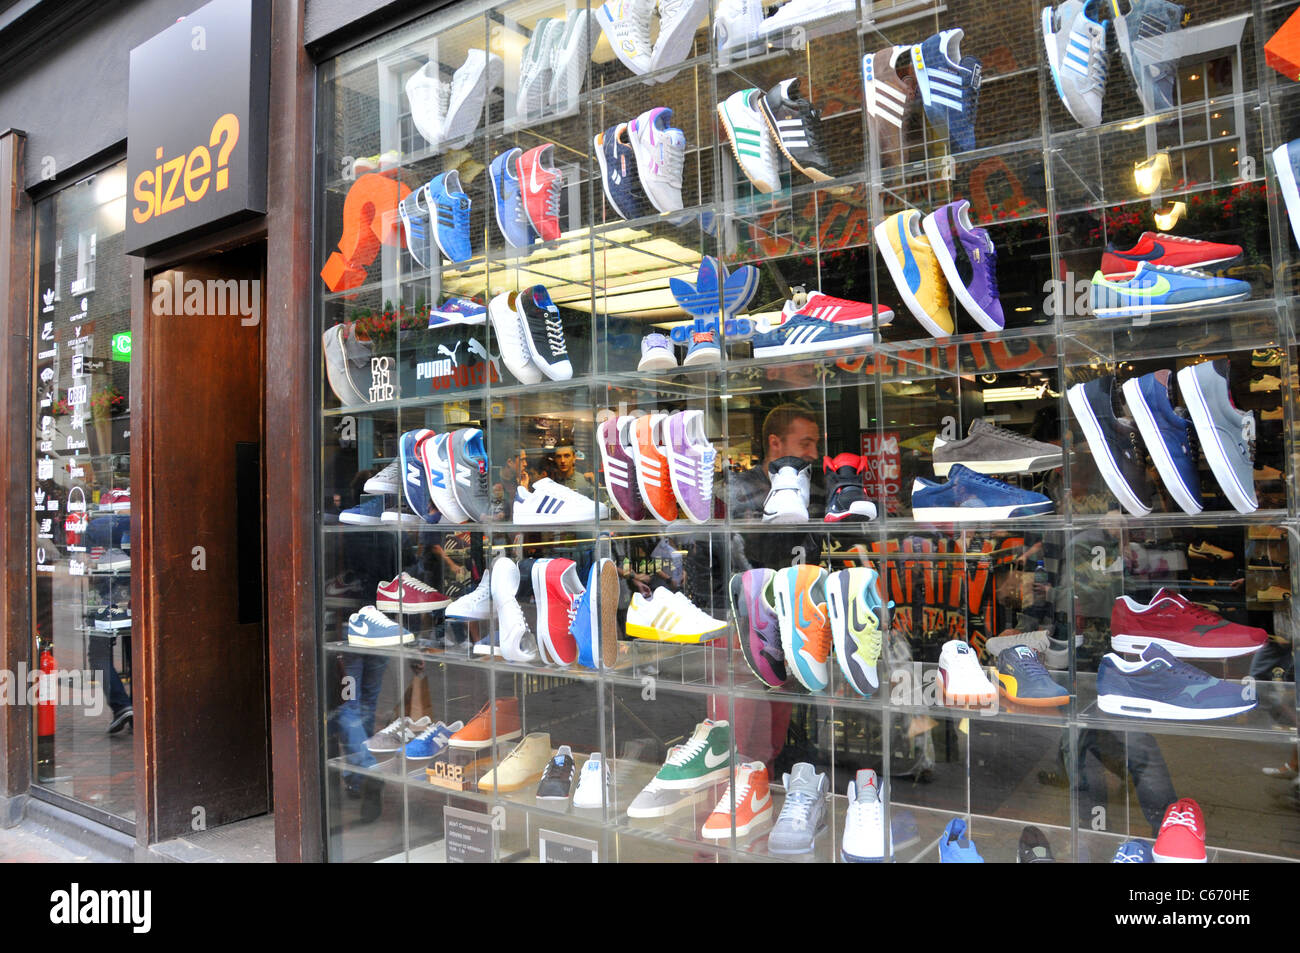 Size? shoe shop London window display Stock Photo